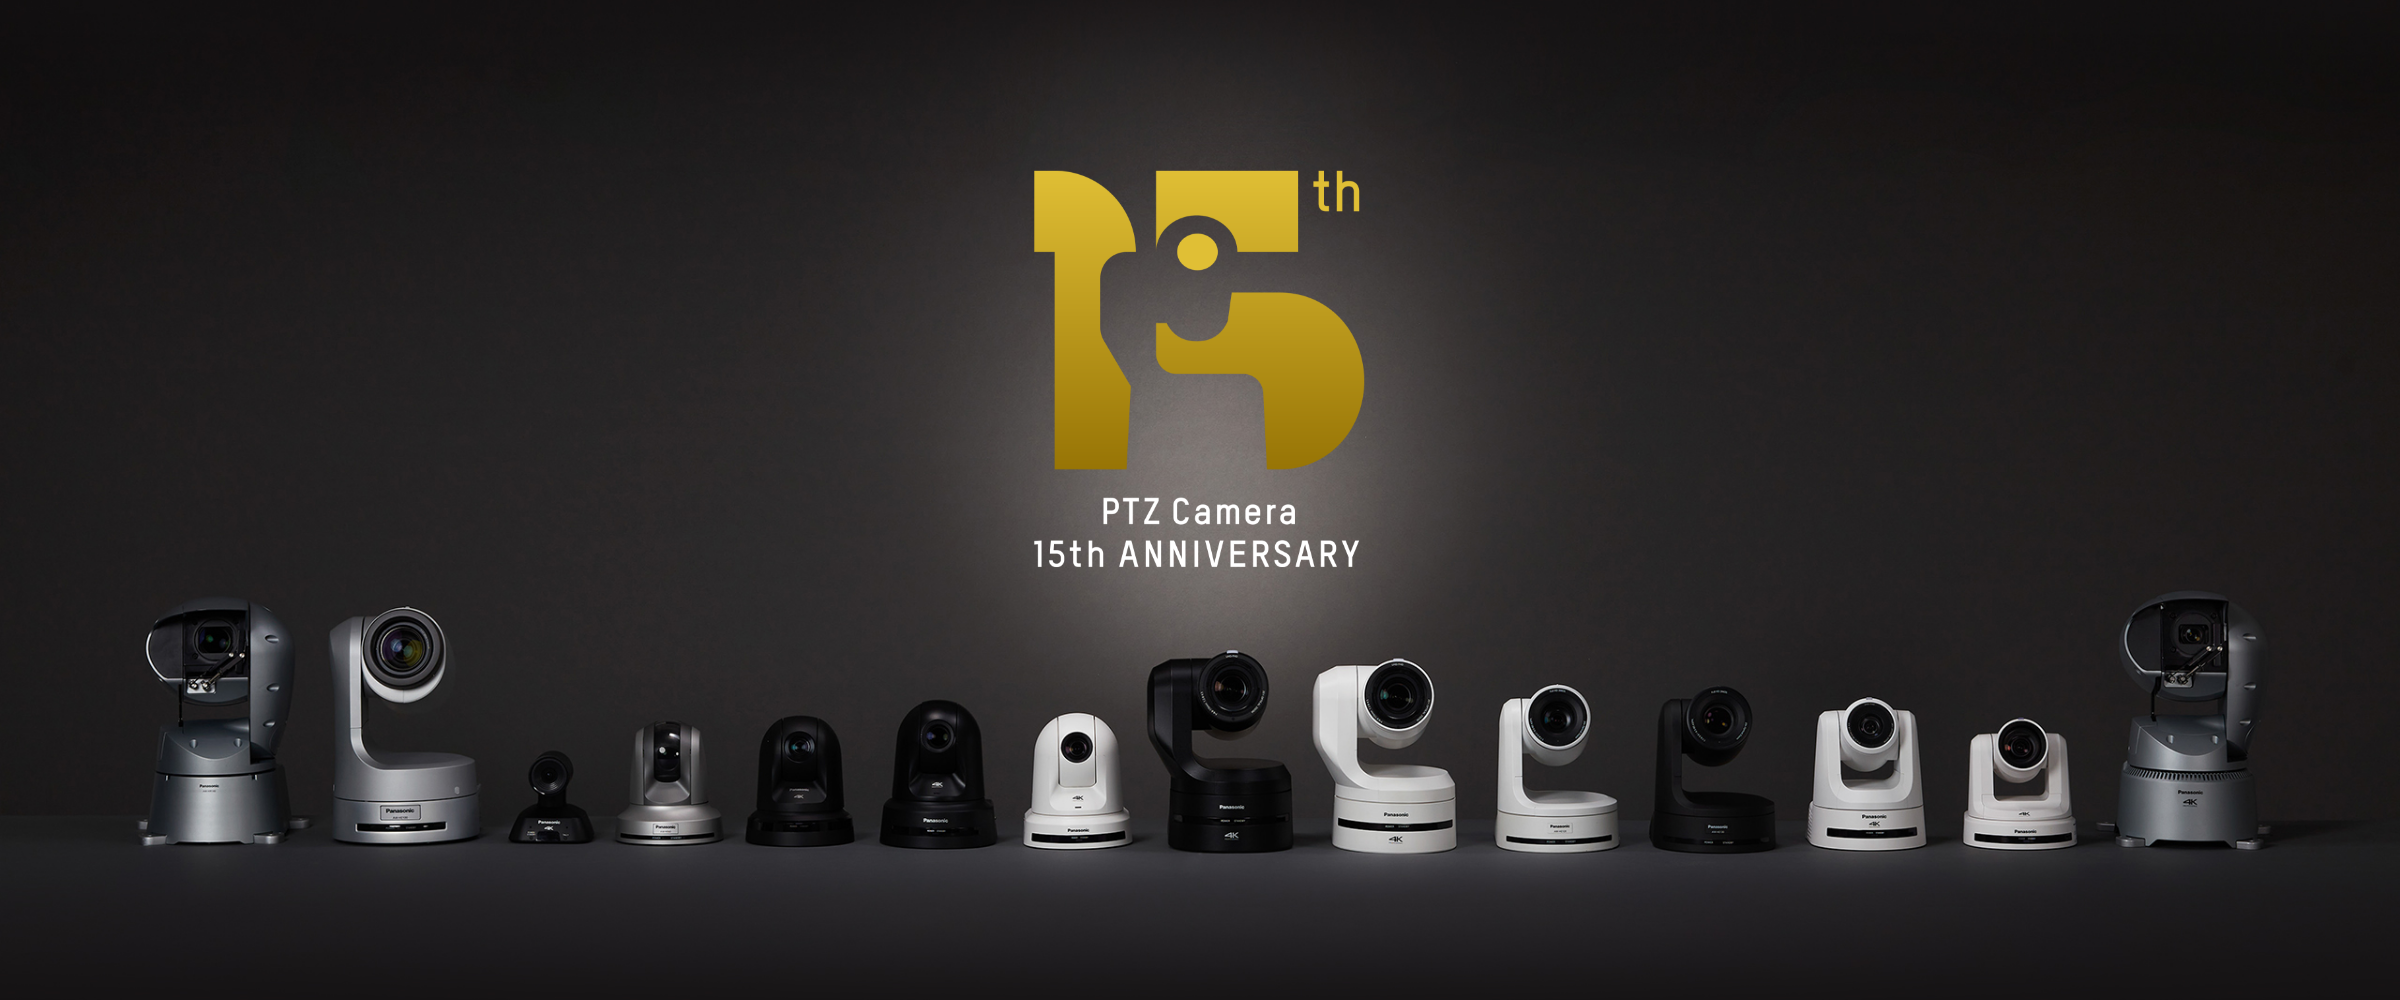 PTZ Camera 15th ANNIVERSARY